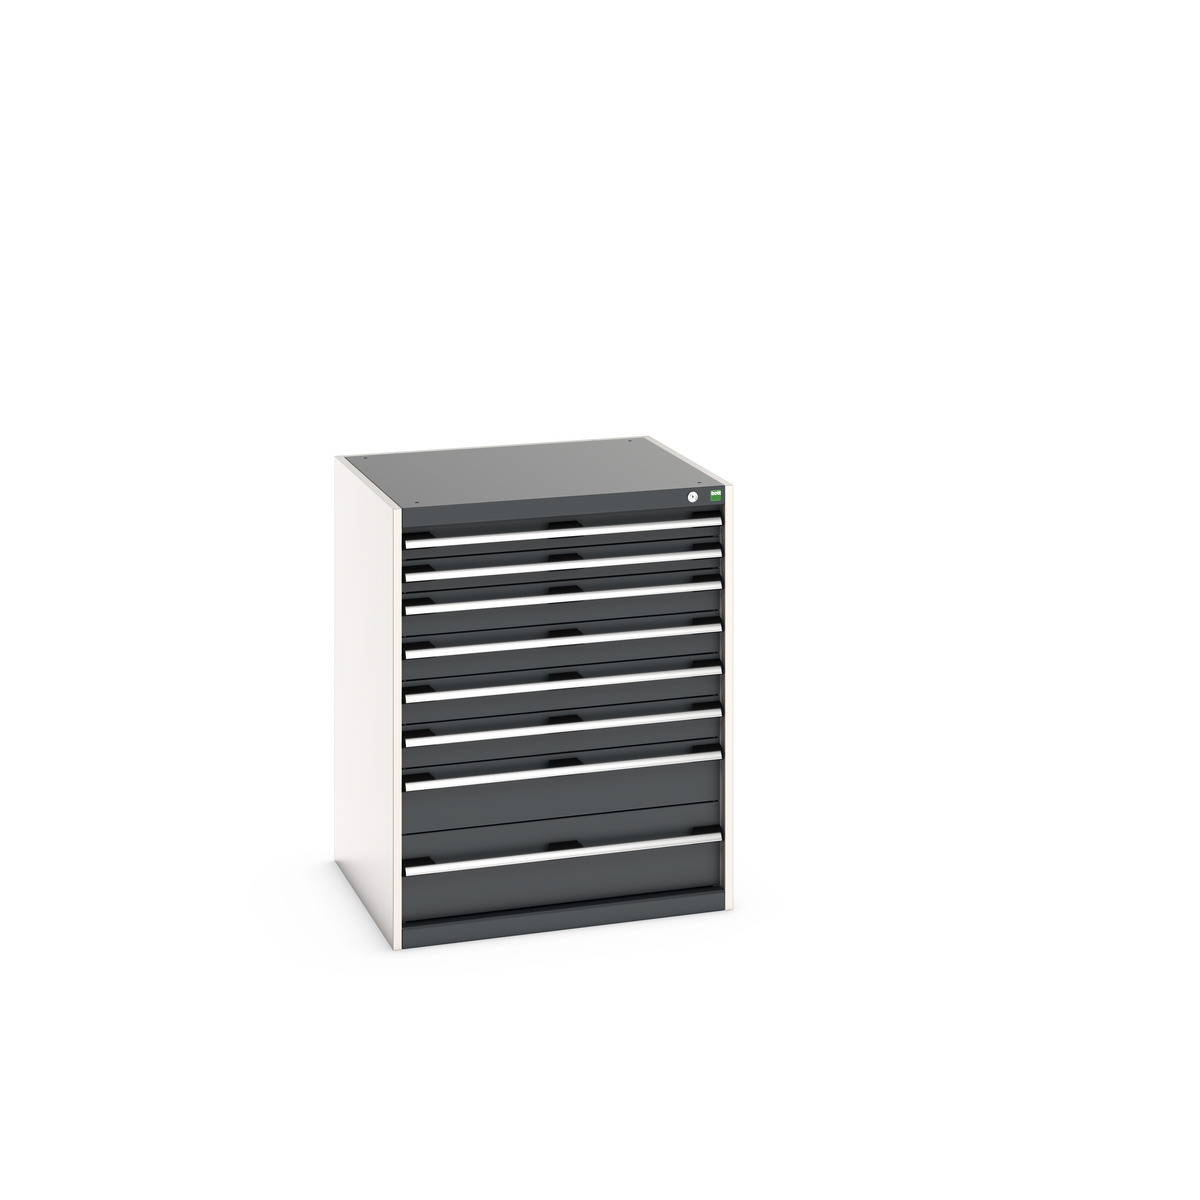 40028030. - cubio drawer cabinet 